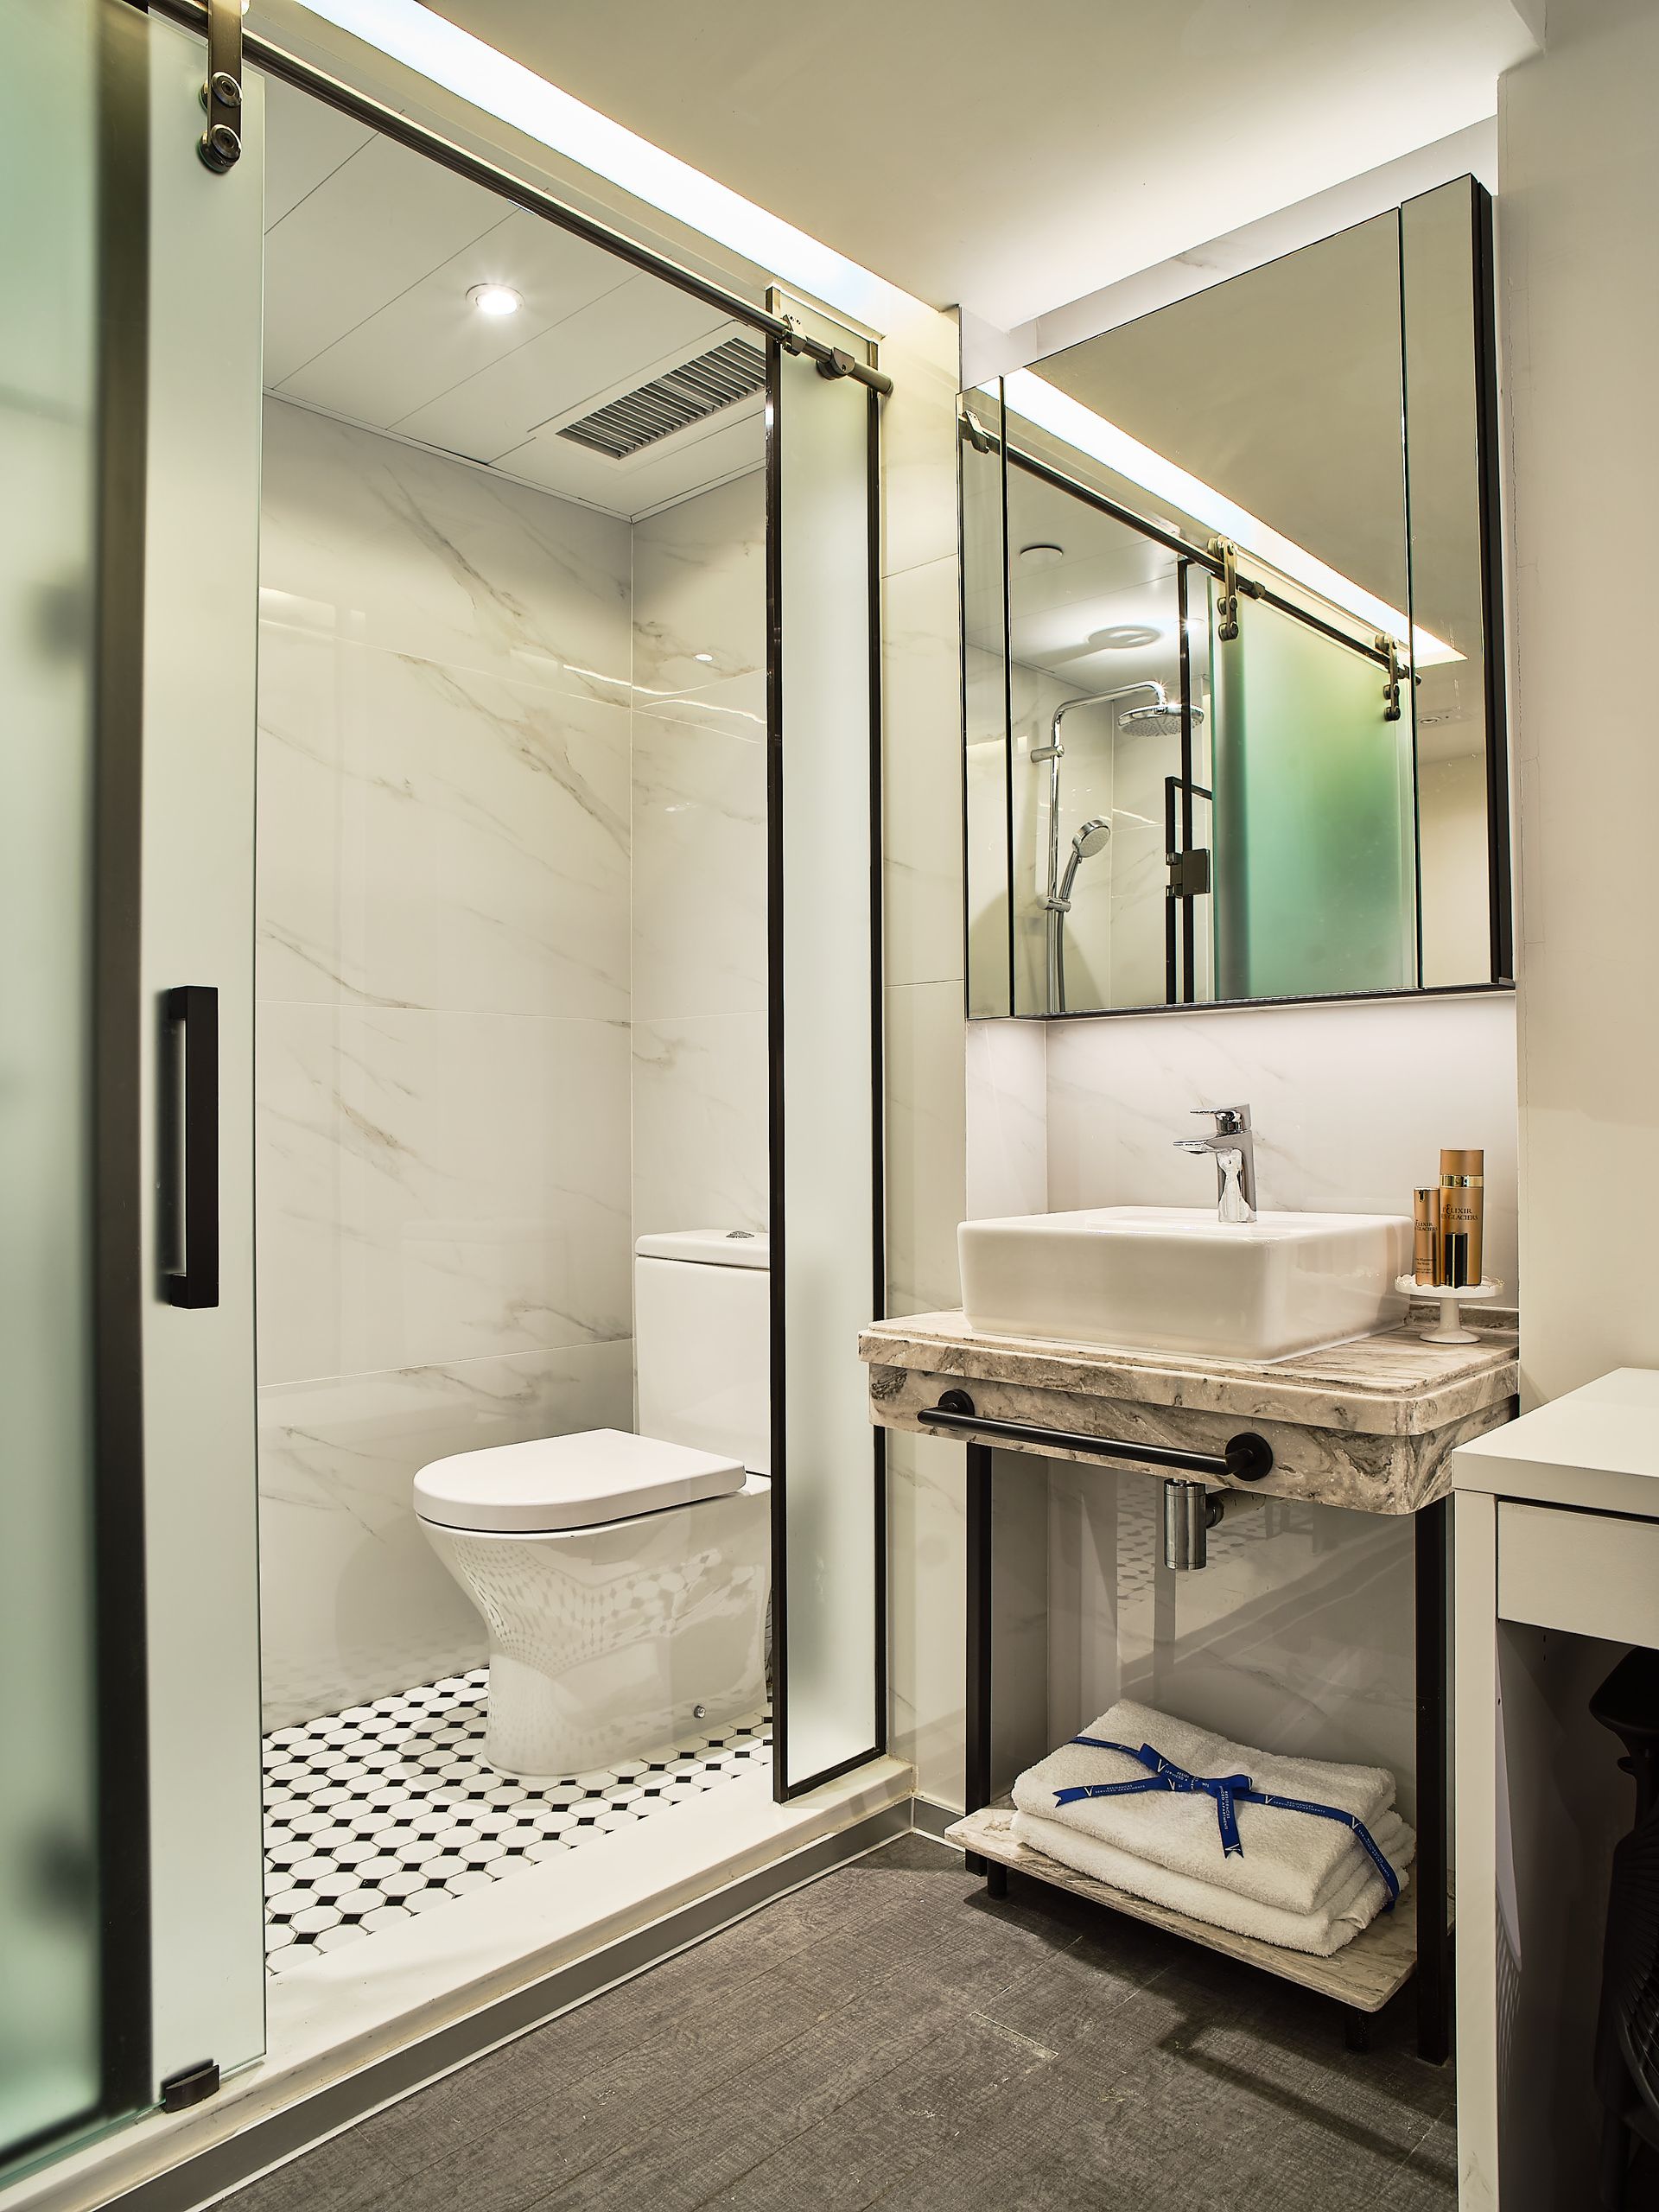 The V 銅鑼灣怡和街服務式住宅高級公寓浴室